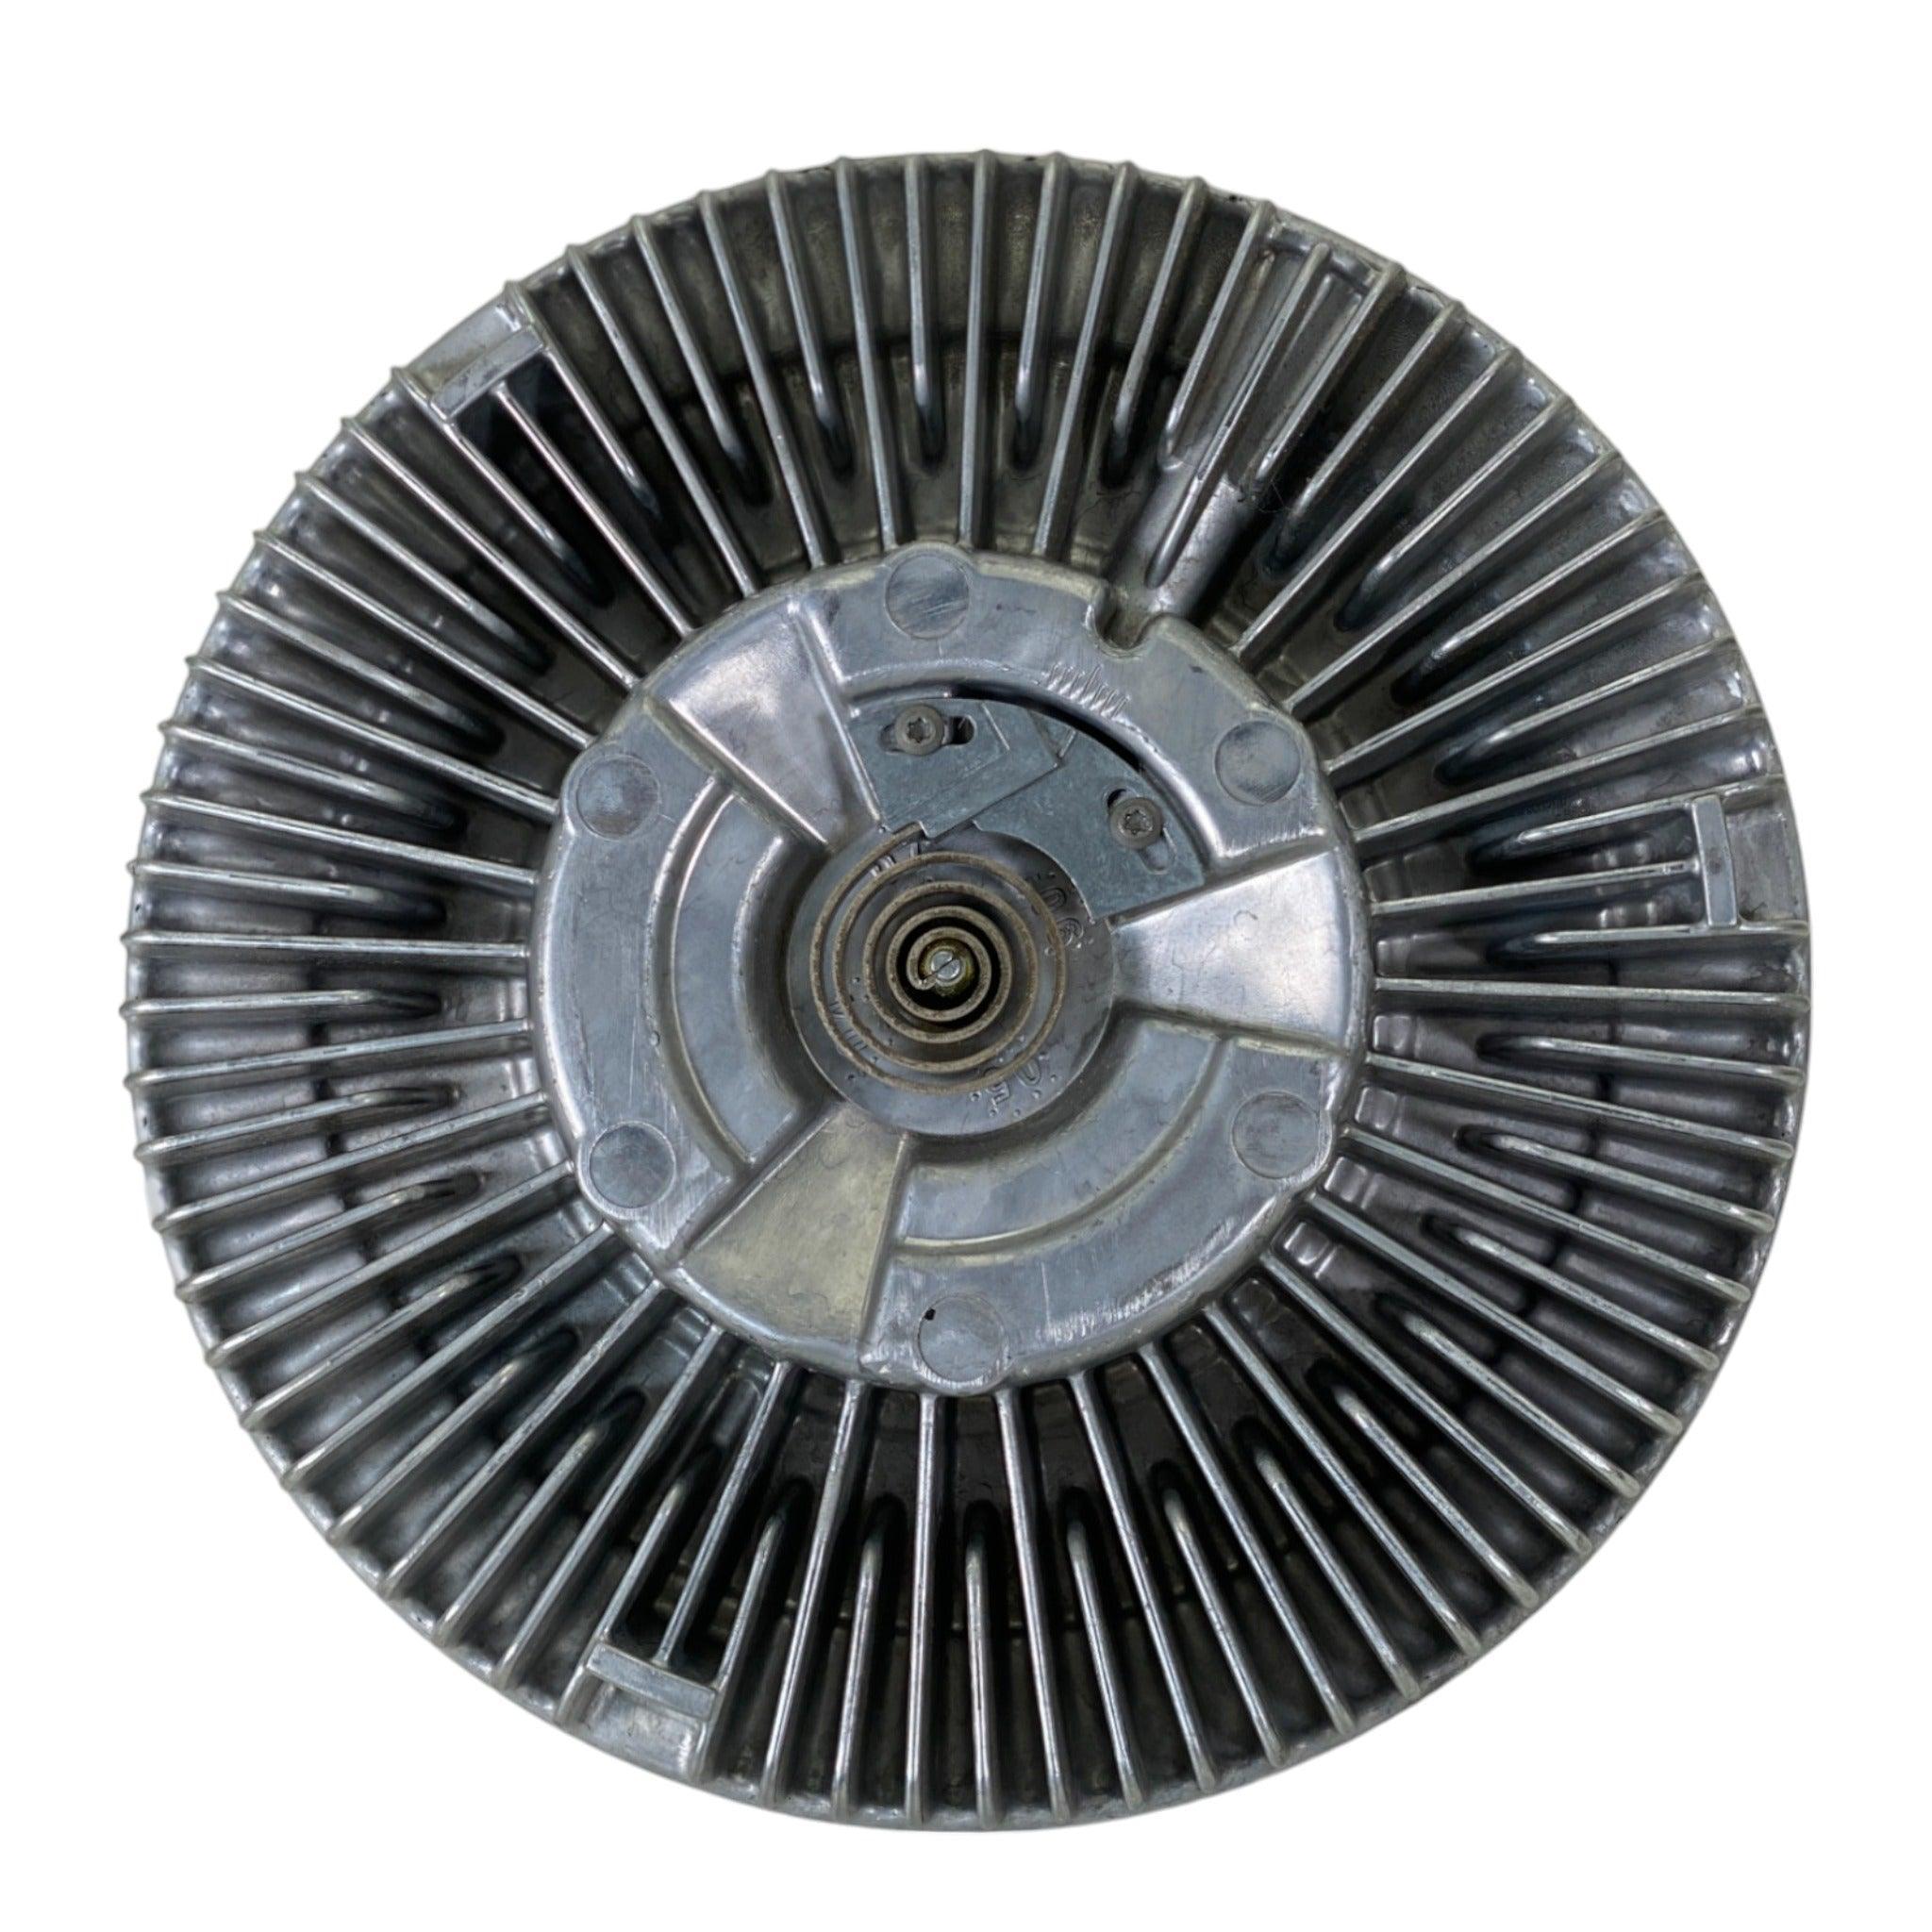 3522788C2 Genuine International Engine Fan Clutch For Dt466 Series Engines - ADVANCED TRUCK PARTS